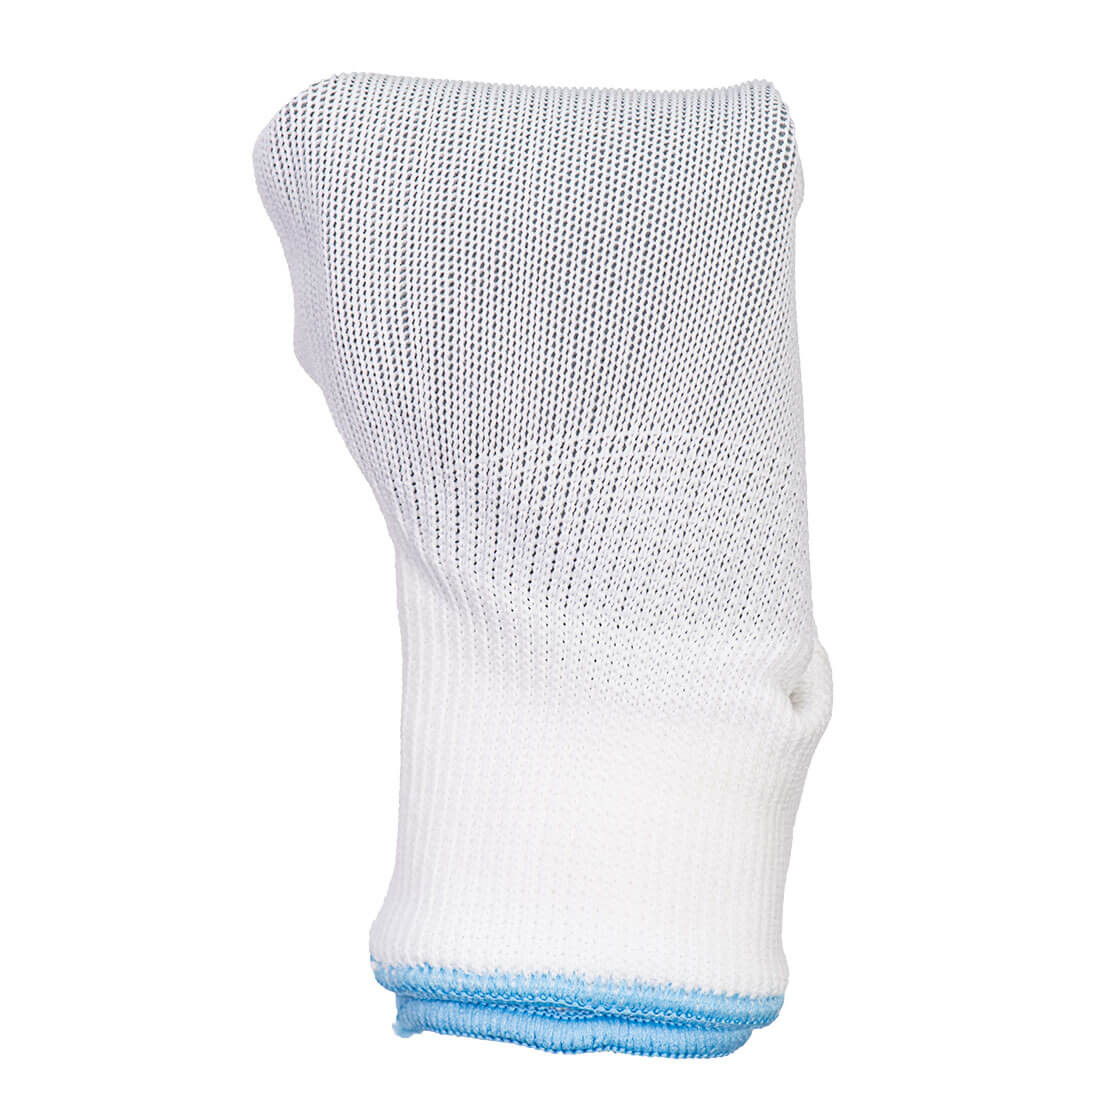 Manusi Vending Flexo Grip - Echipamente de protectie personala